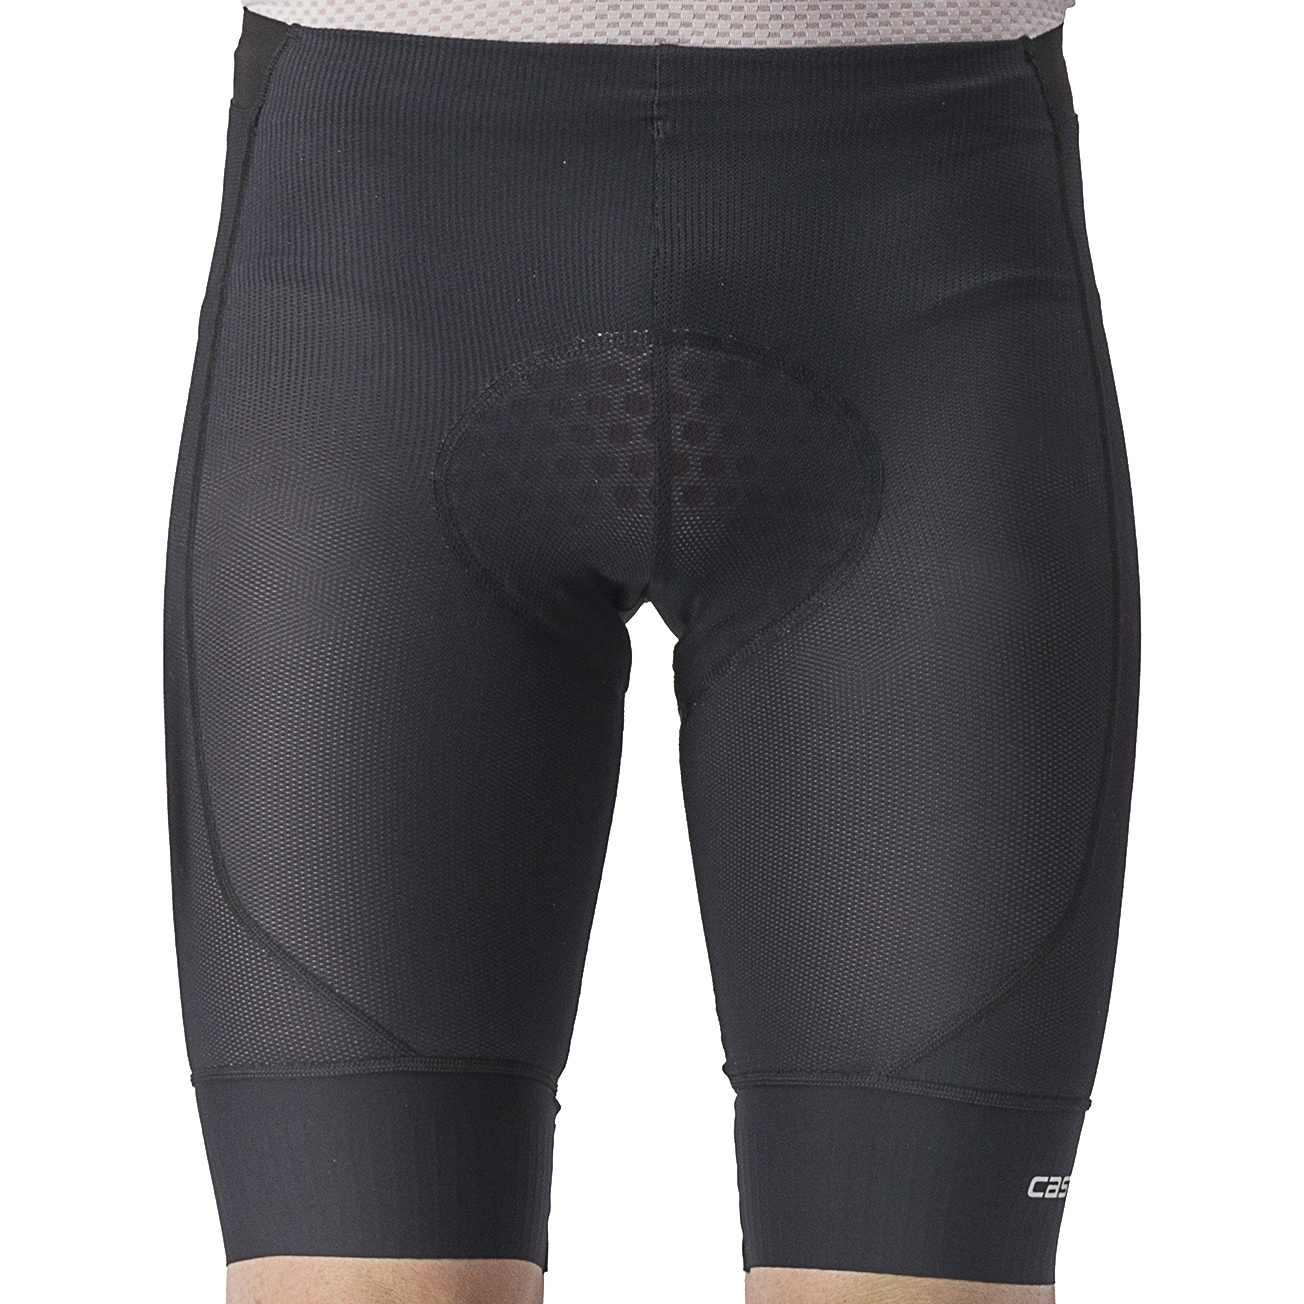 Productfoto van Castelli Trail Liner Shorts Heren - zwart 010